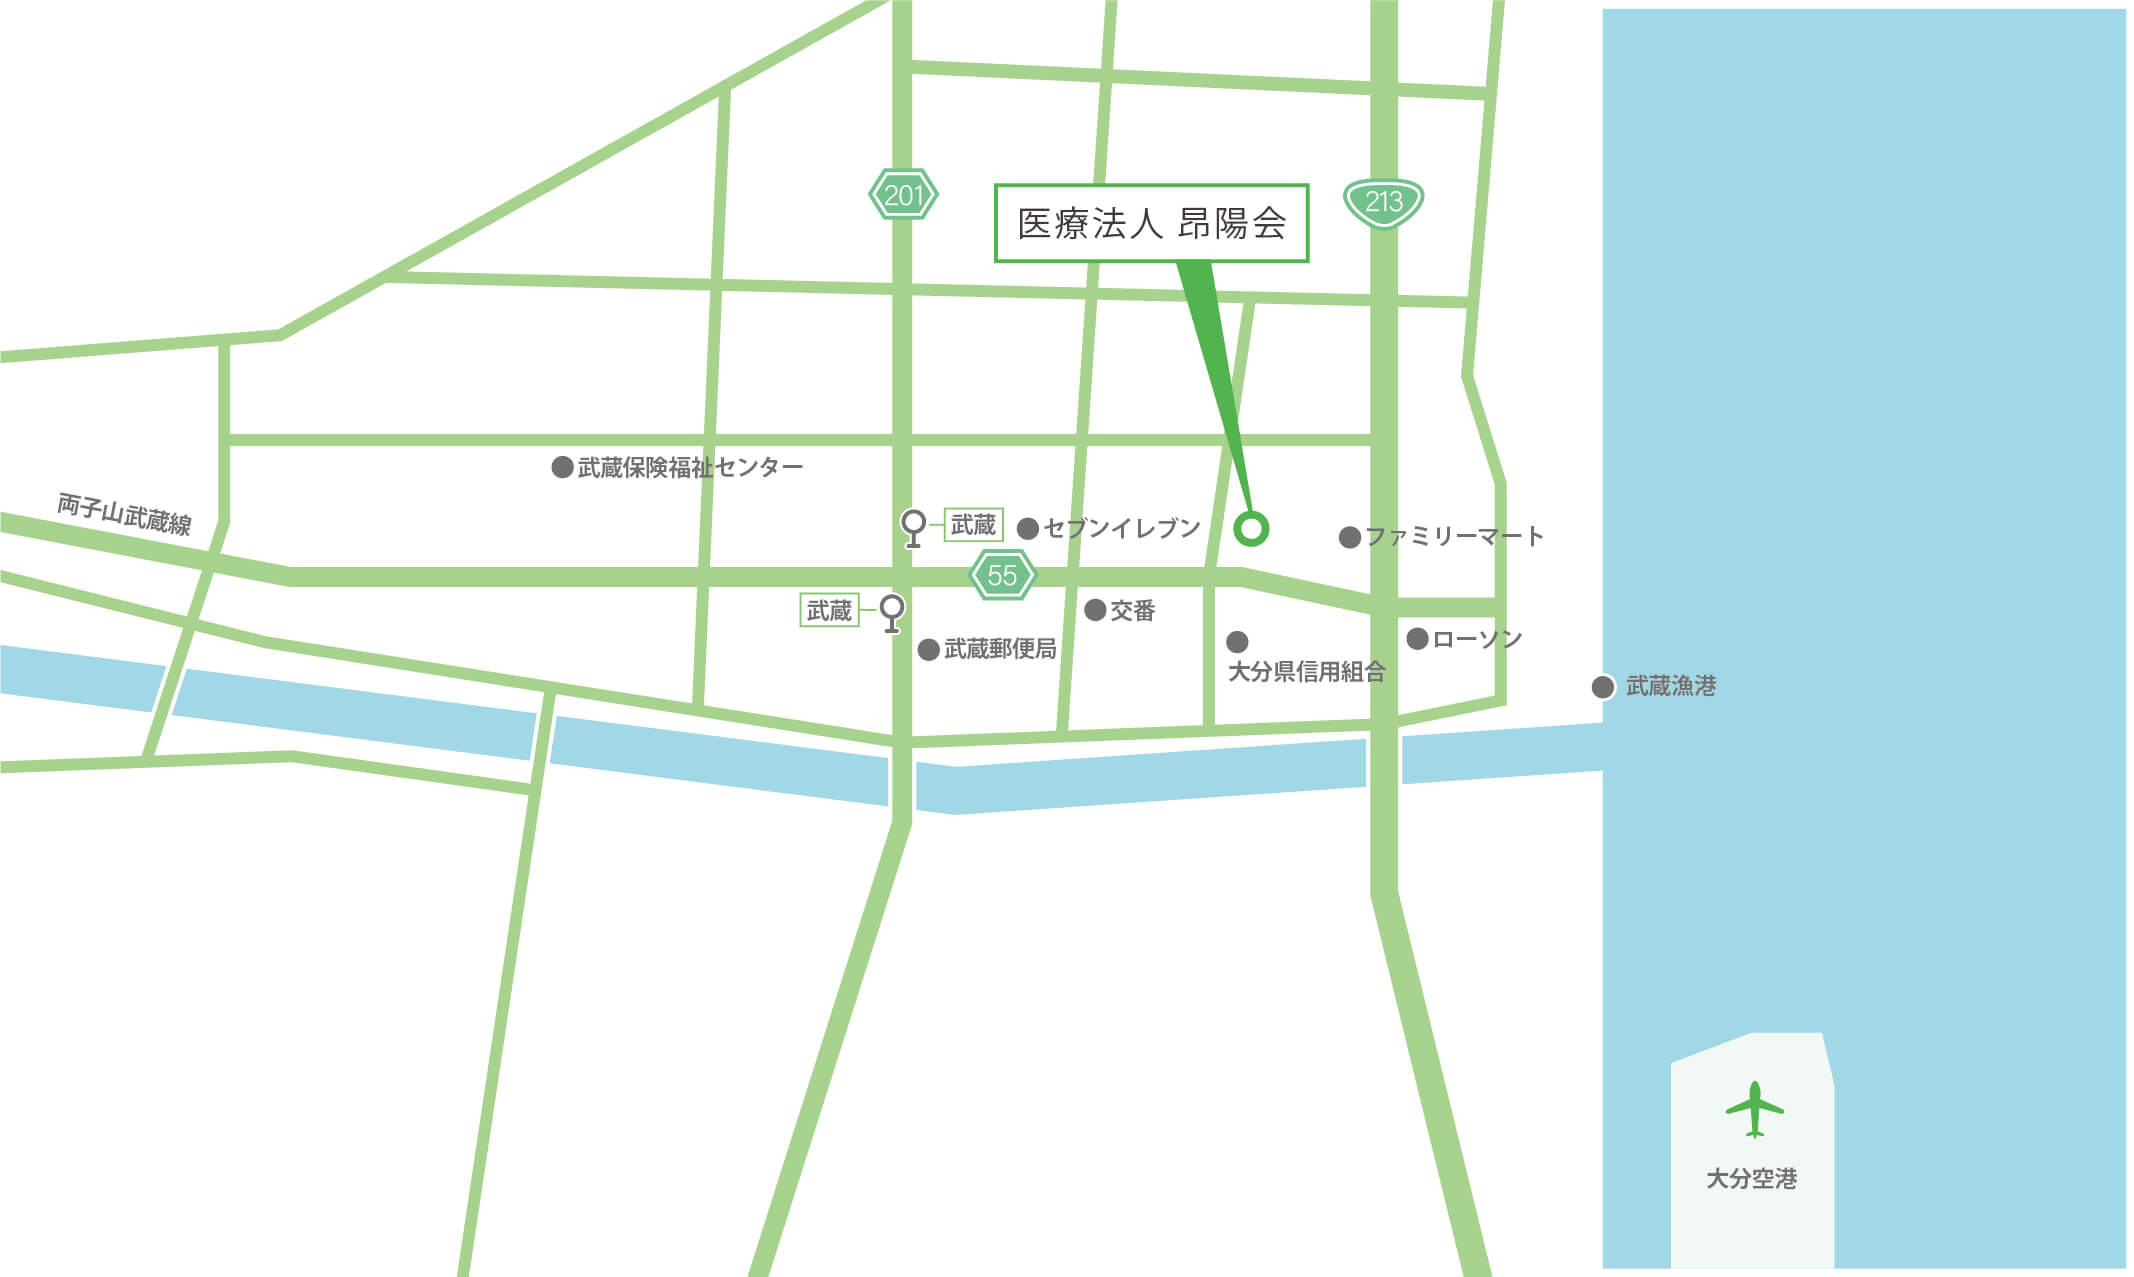 Musashi Location Map